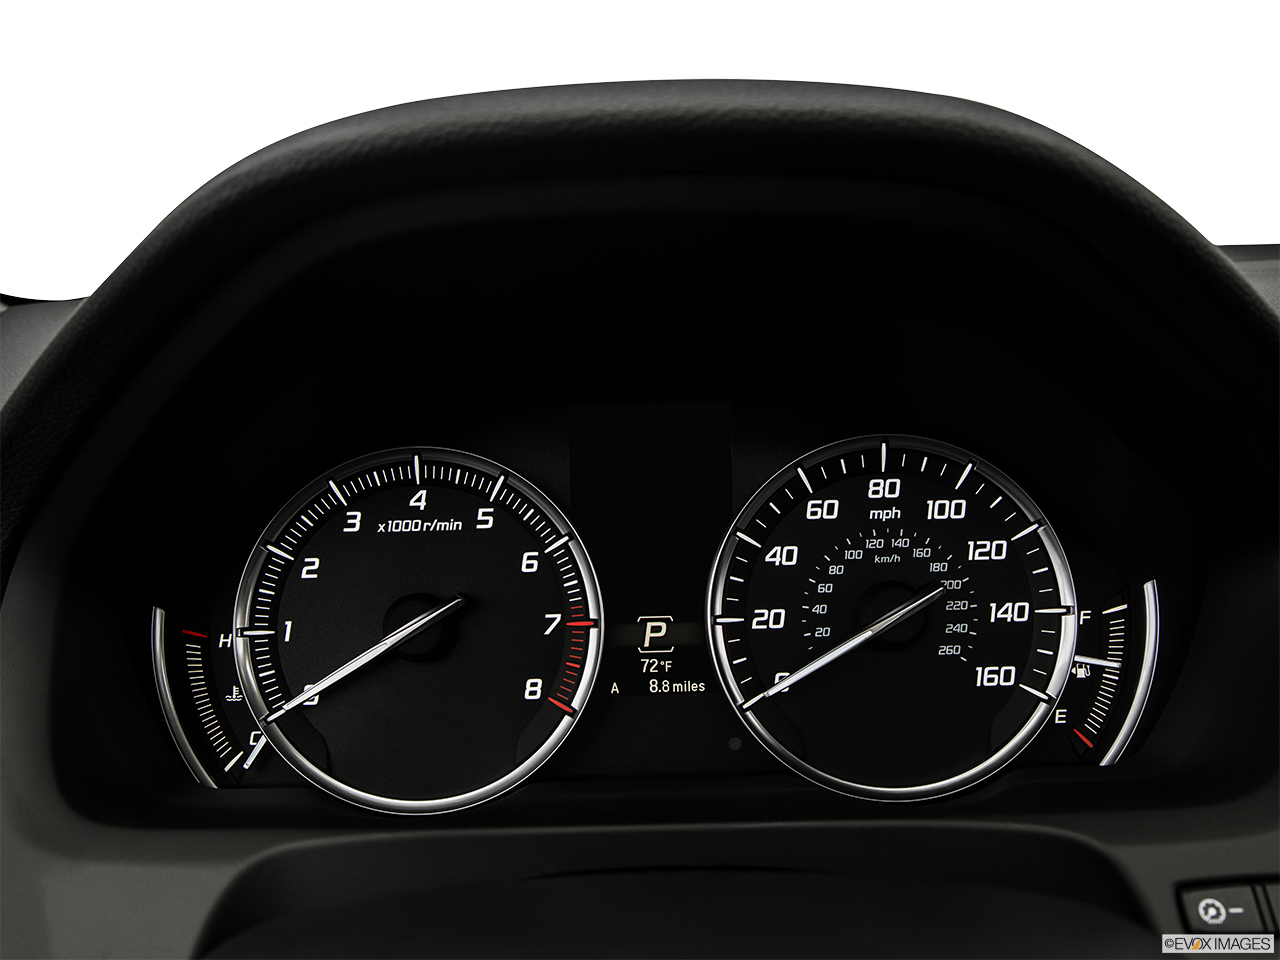 2015 Acura TLX 3.5 V-6 9-AT SH-AWD Speedometer/tachometer. 